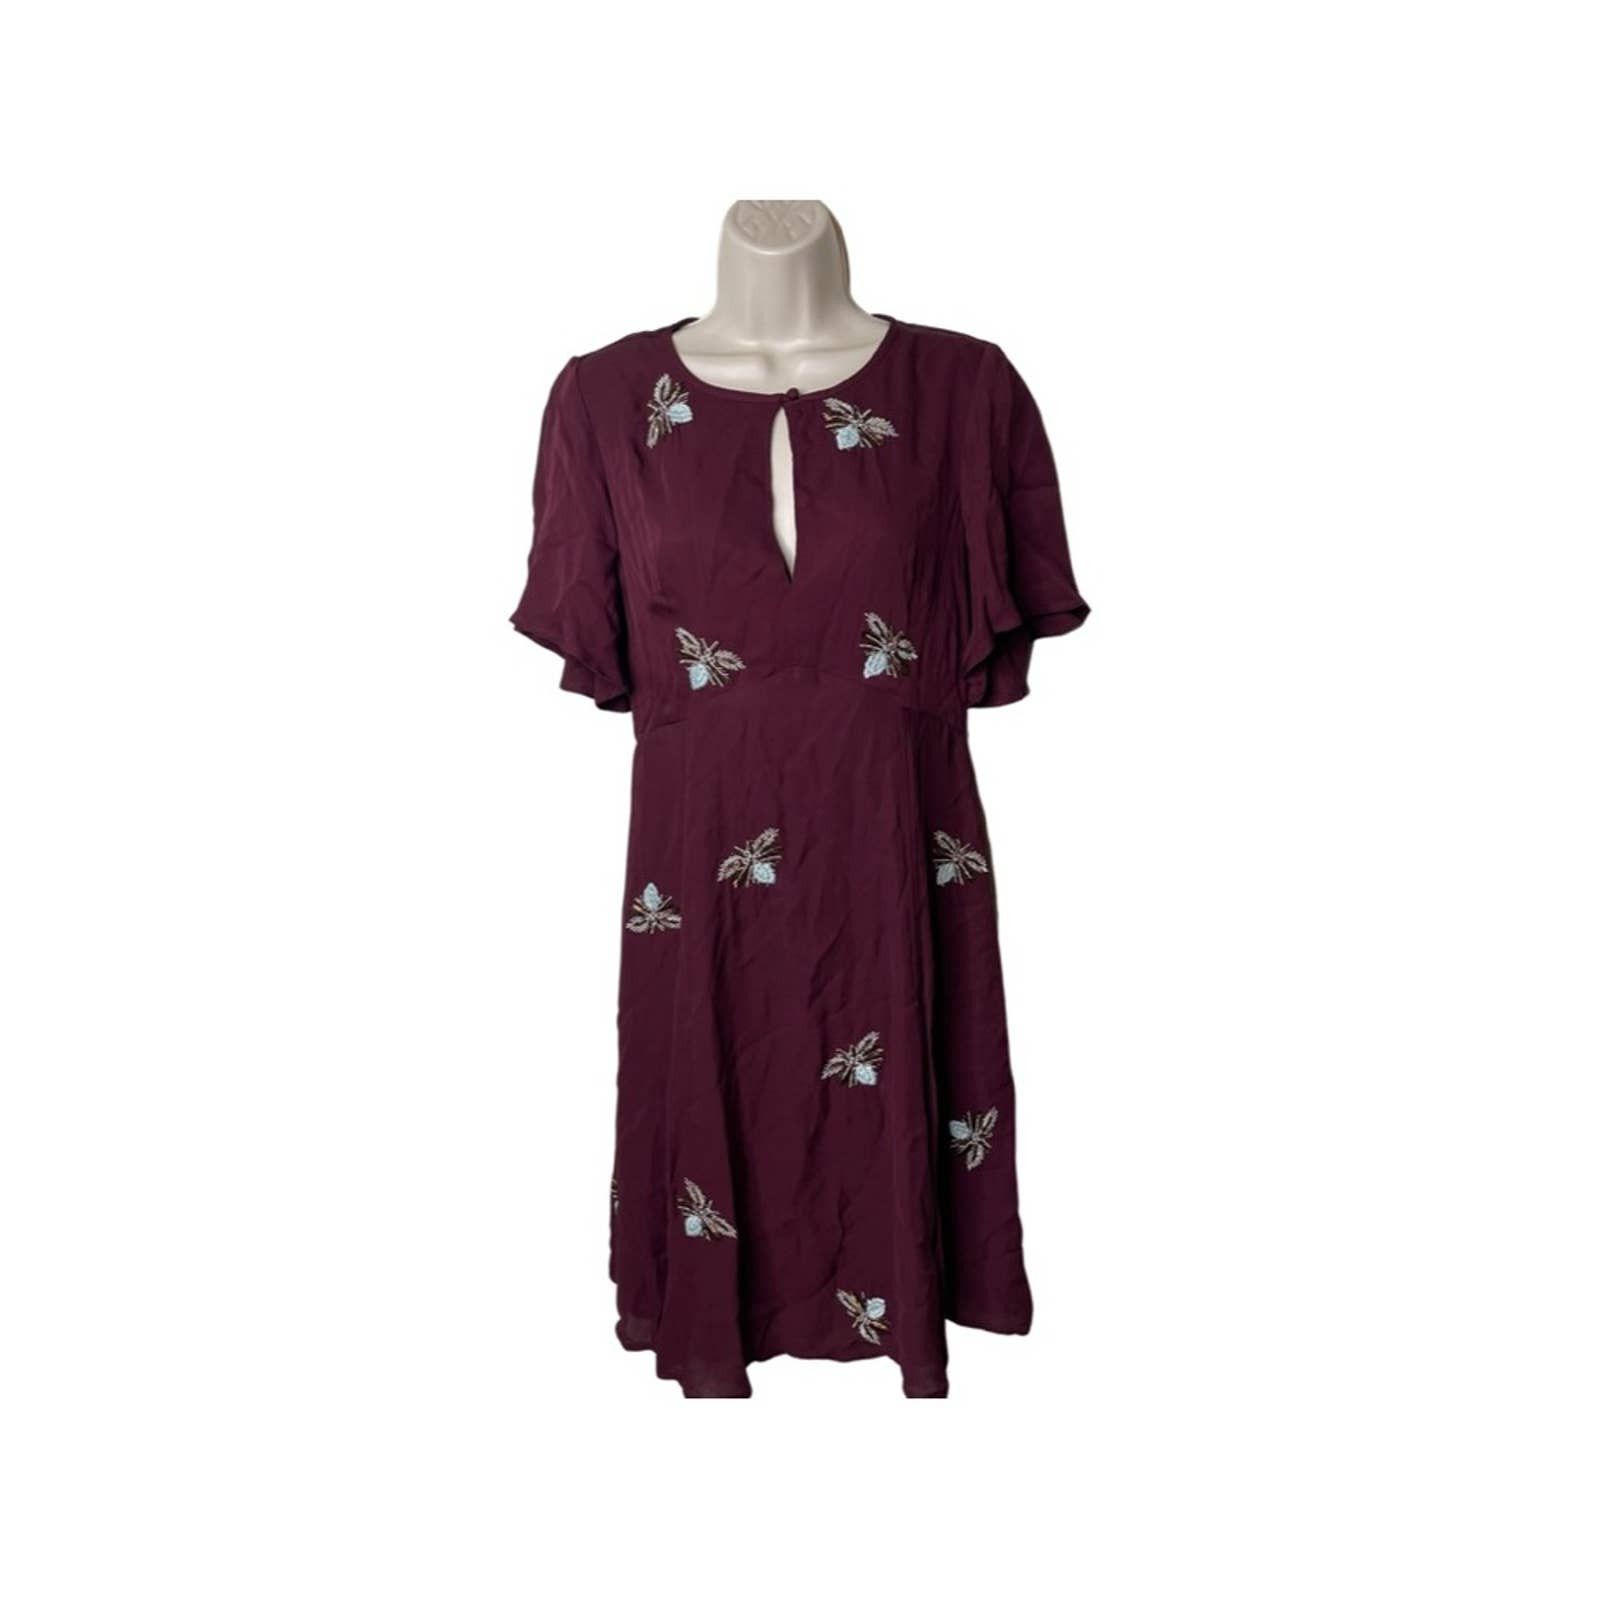 Anthropologie Anthropologi Moulinette Soeurs Burgundy Beaded Firefly Dress Size XS / US 0-2 / IT 36-38 - 3 Thumbnail